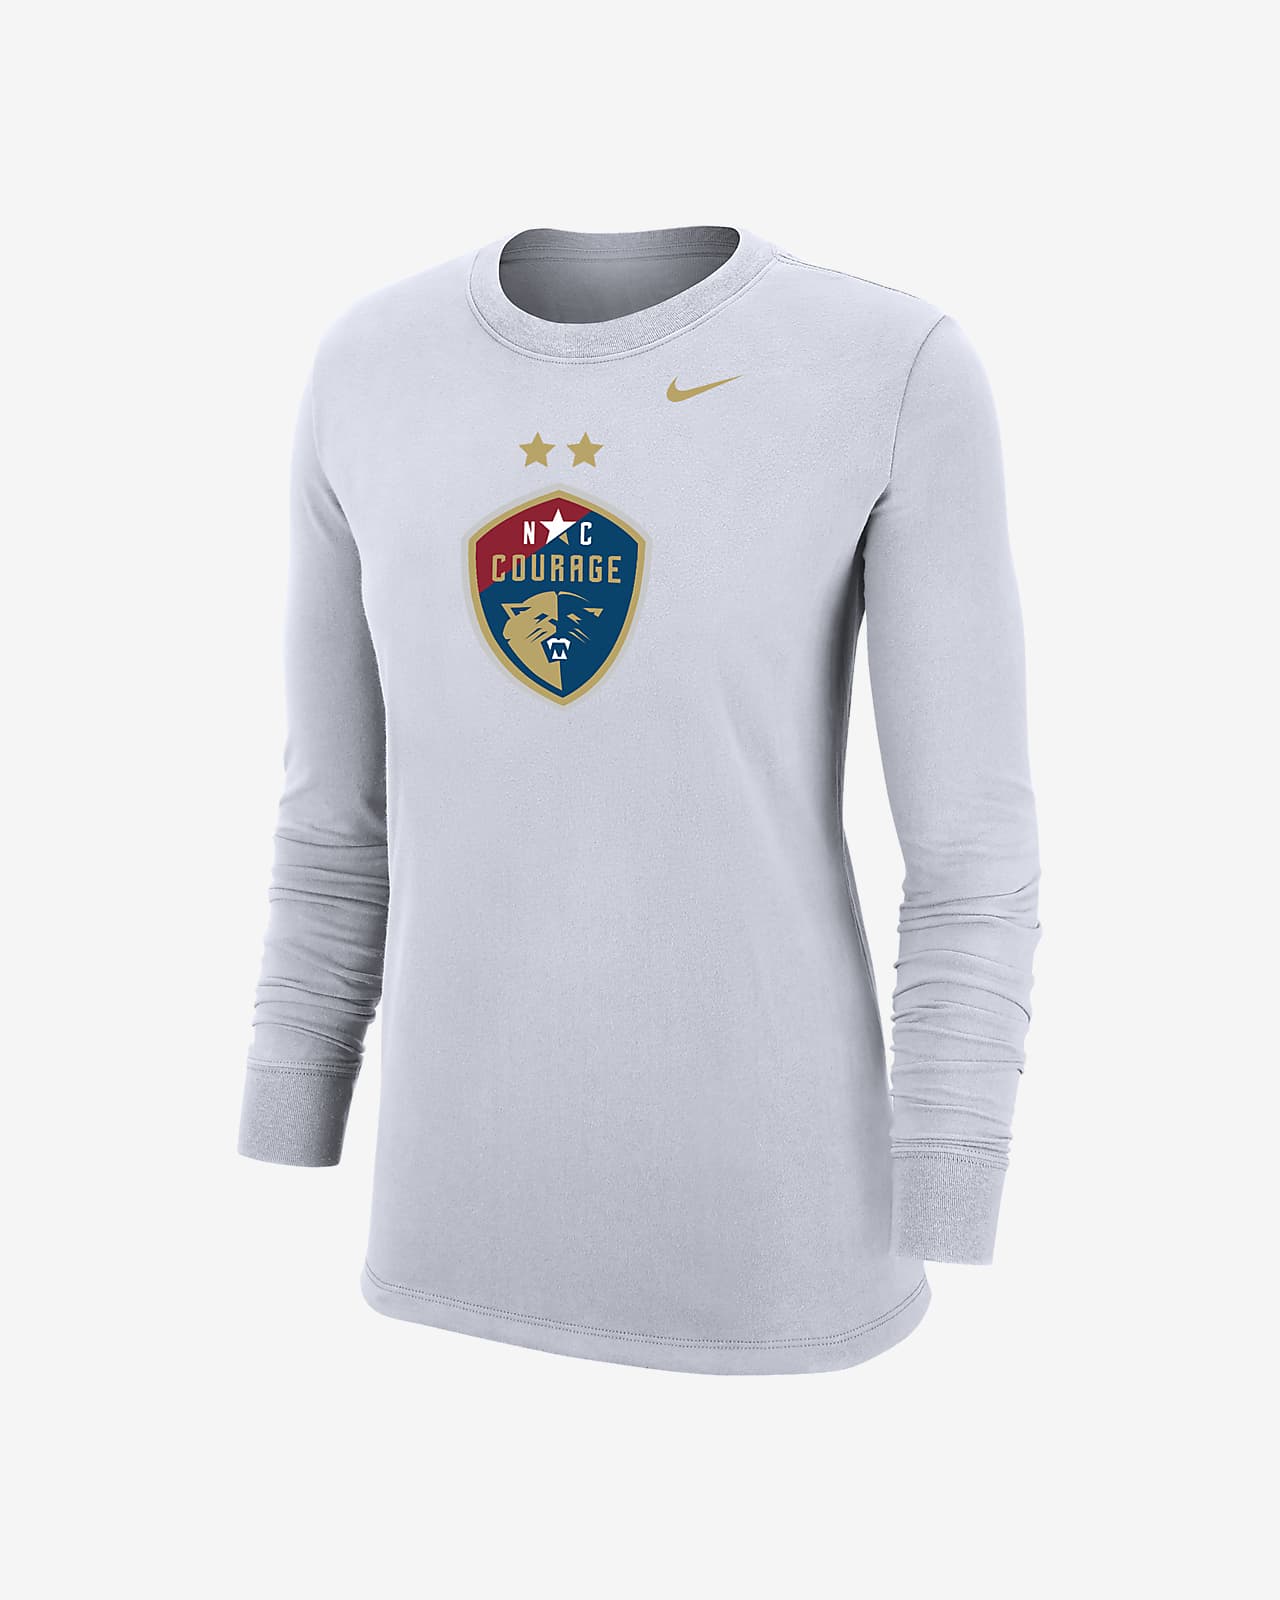 North Carolina Courage Women's Nike Soccer Long-Sleeve T-Shirt